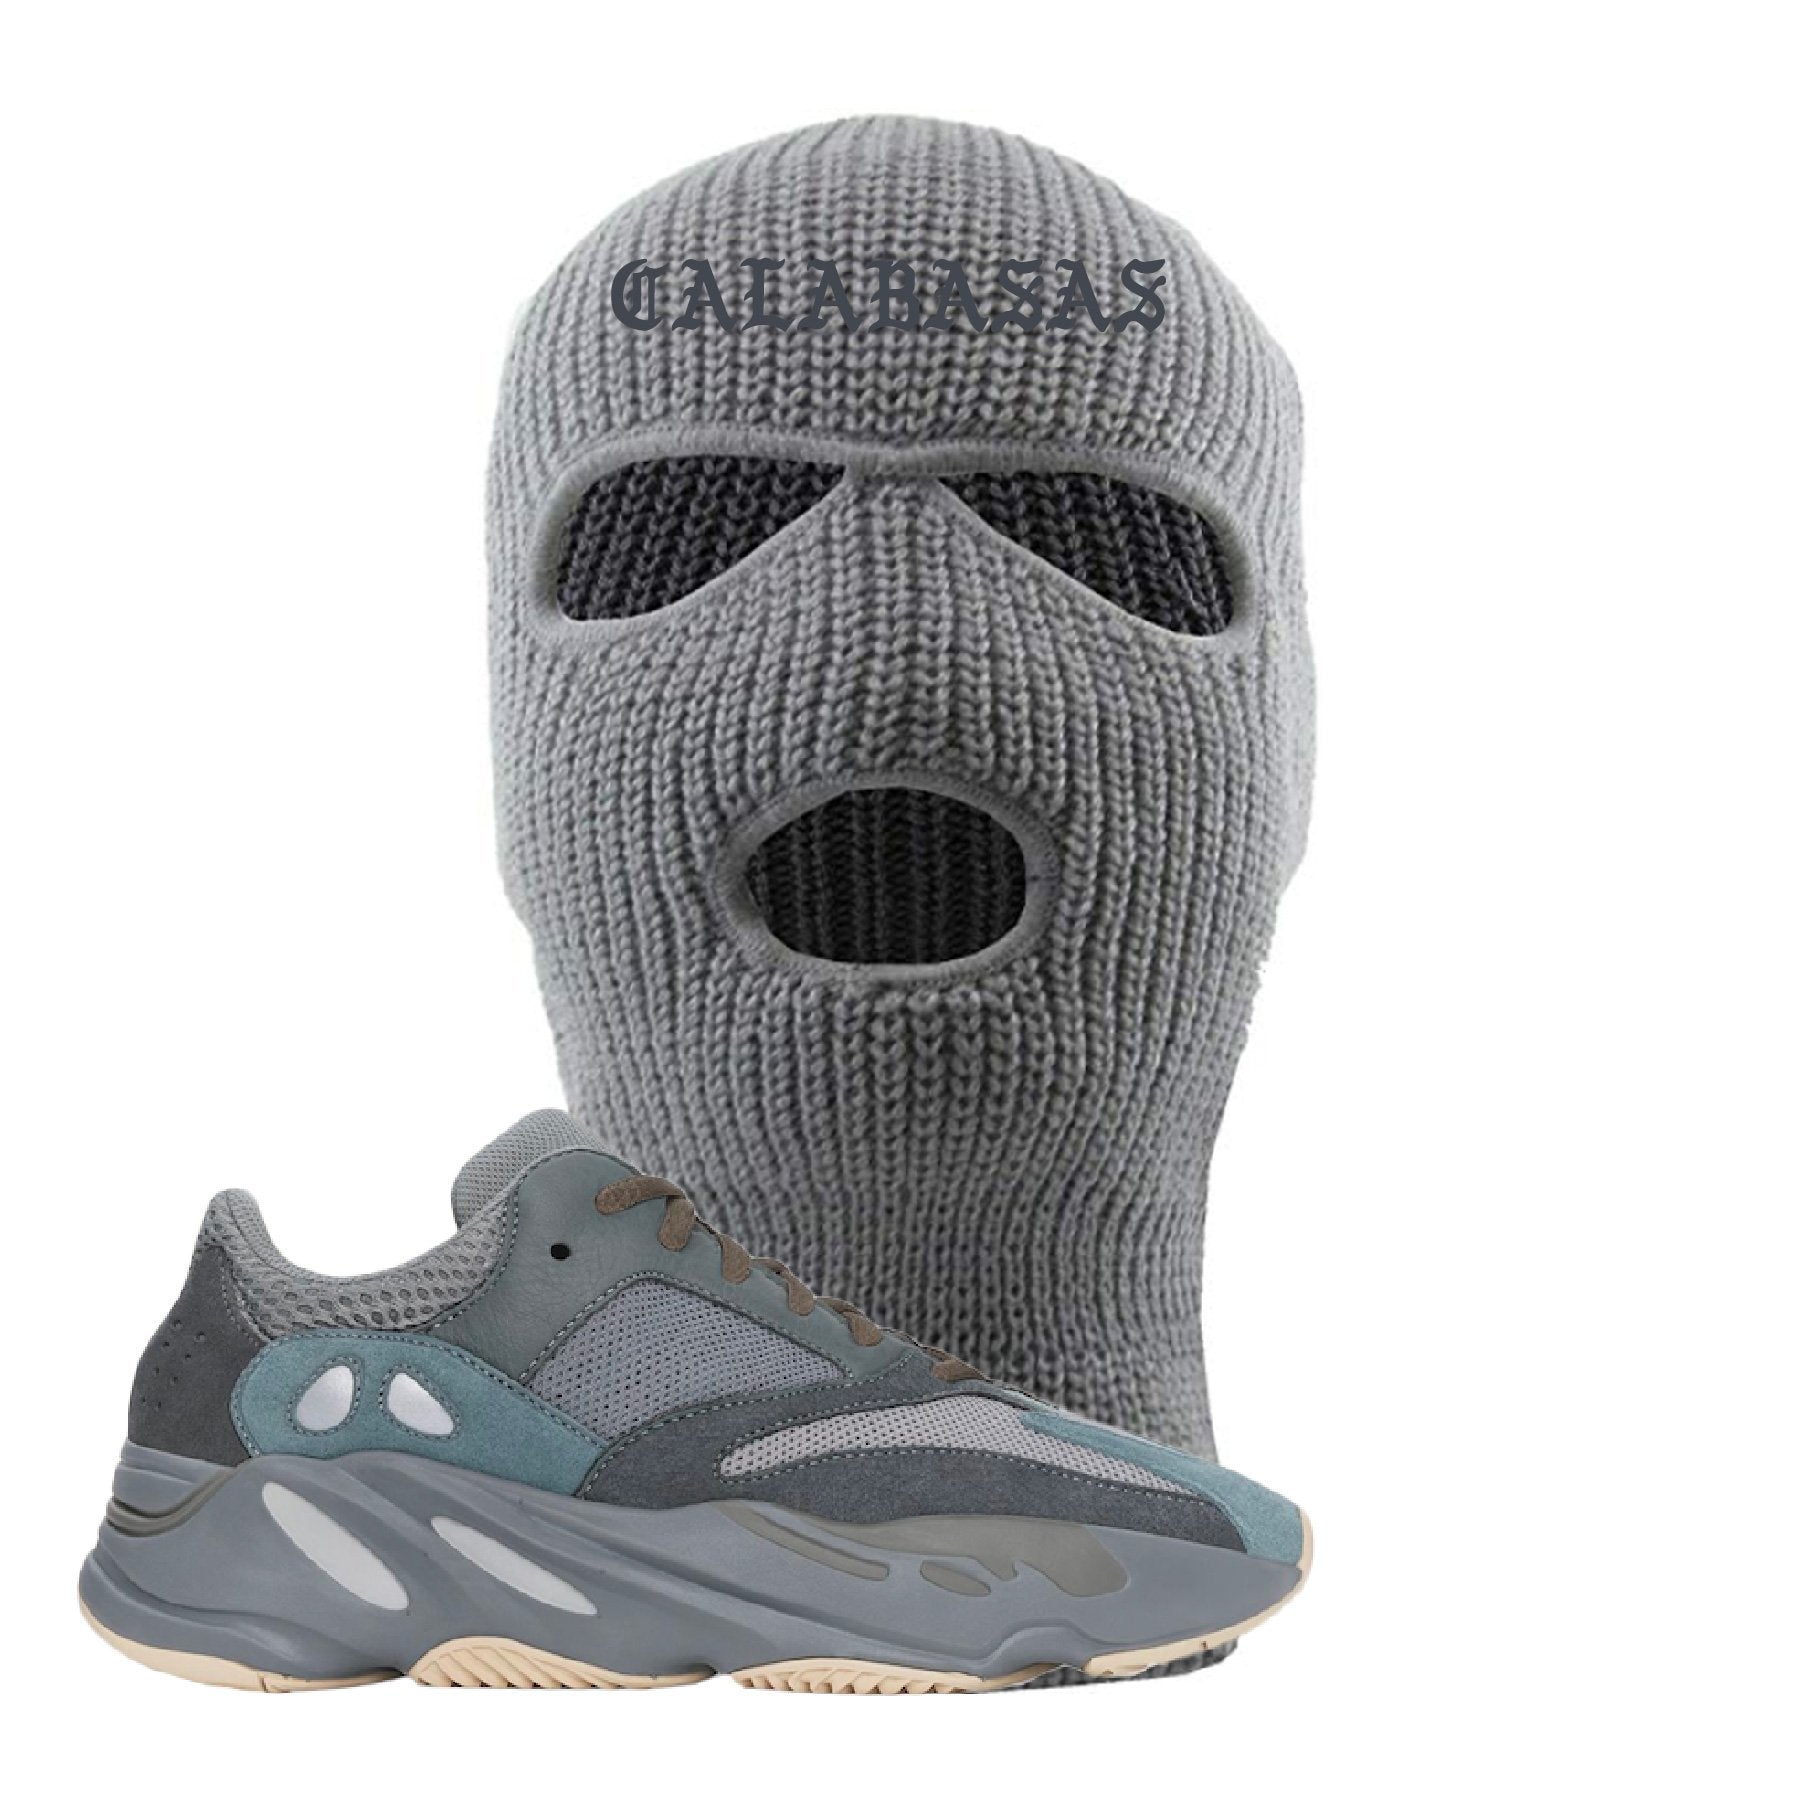 Yeezy Boost 700 Teal Blue Calabasas Light Gray Sneaker Hook Up Ski Mask